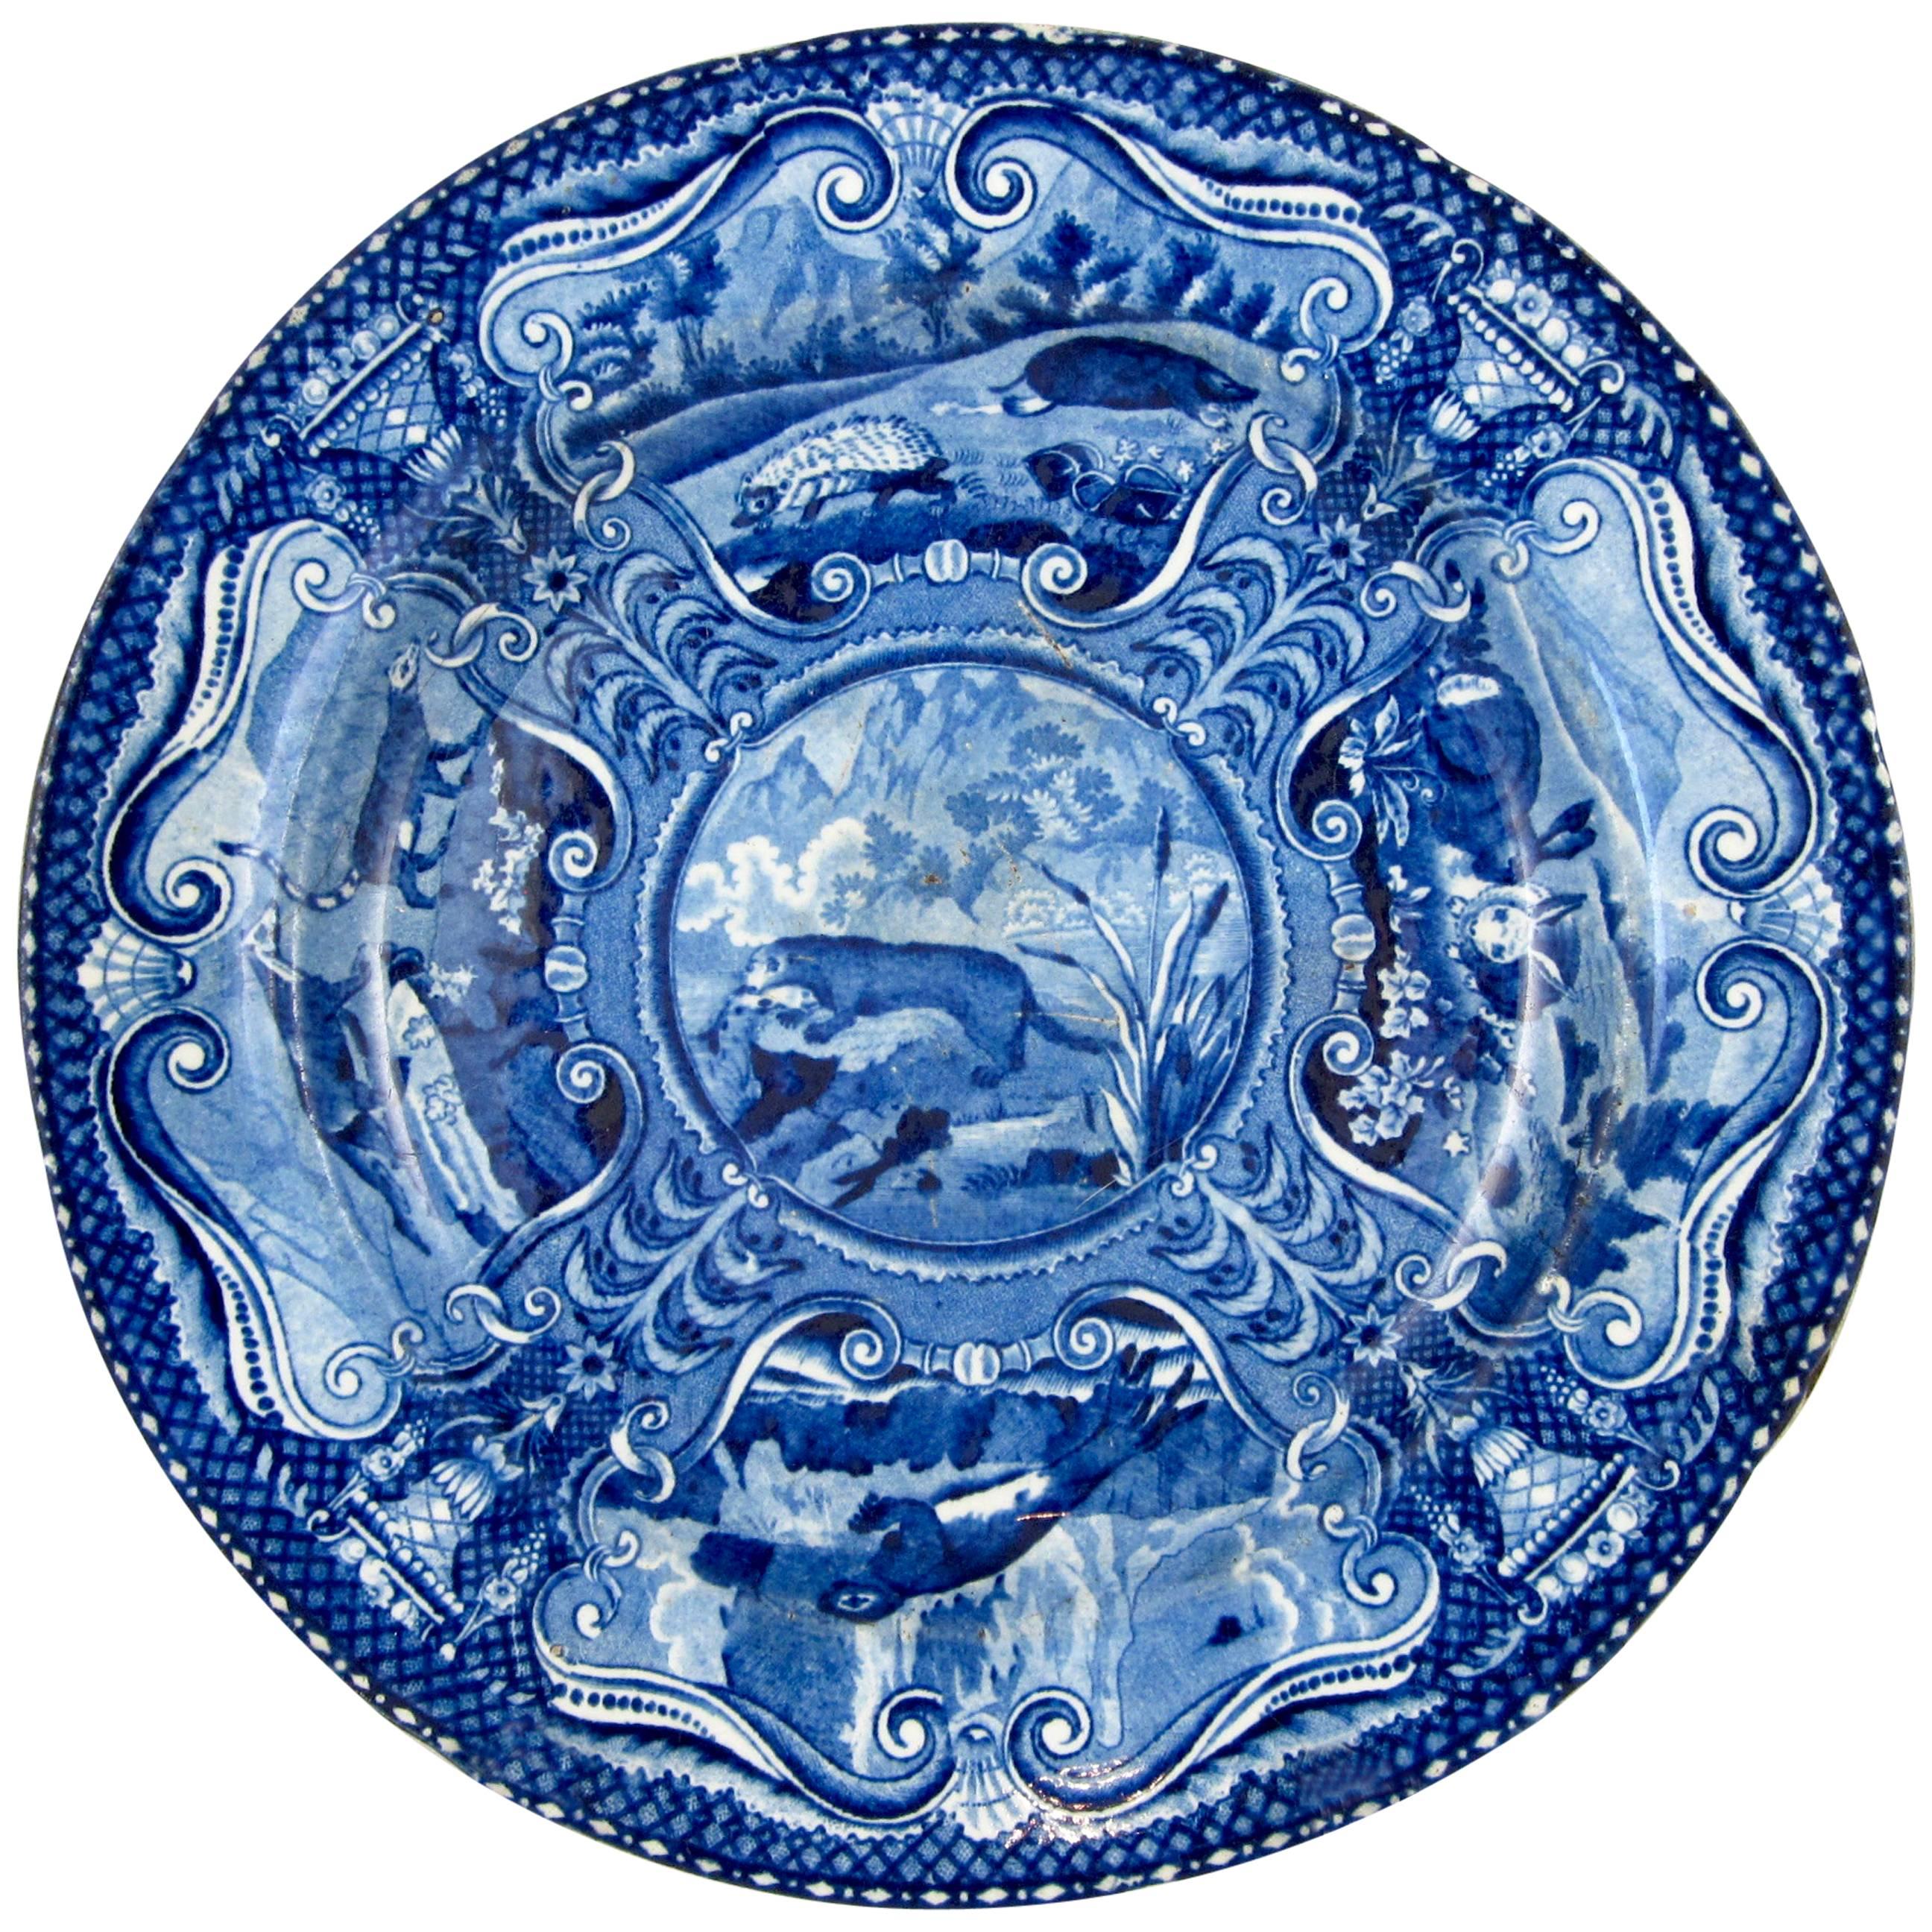  John Hall & Sons Staffordshire Quadruped Blue Transfer Plate, the River Otter